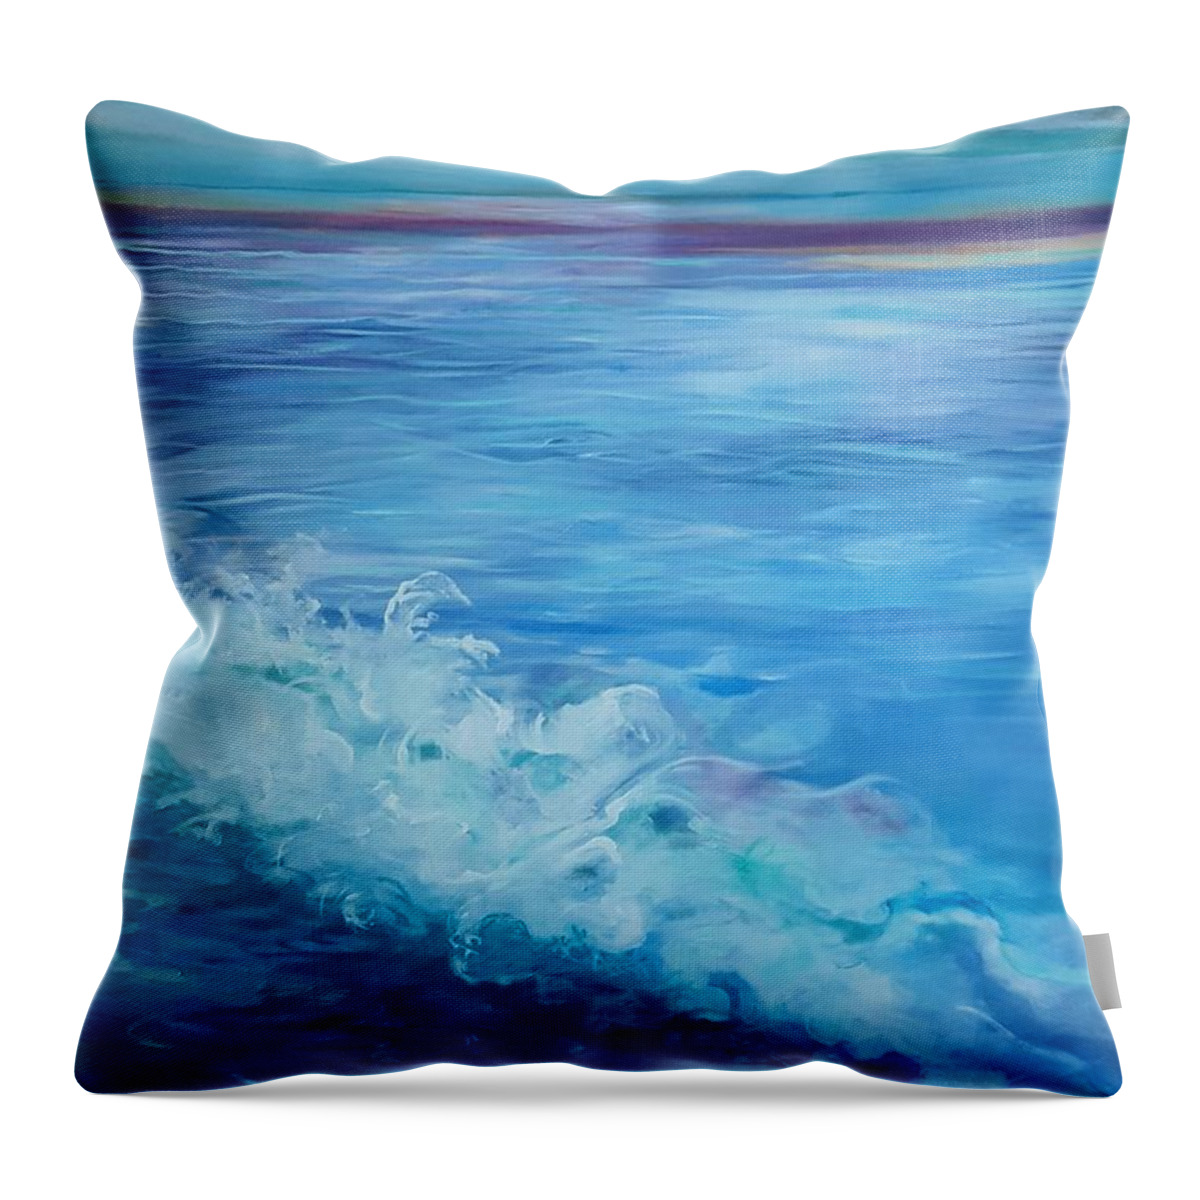 Ocean Blue Crashing Waves Landscape Throw Pillow featuring the painting Ocean Blue by Jan VonBokel